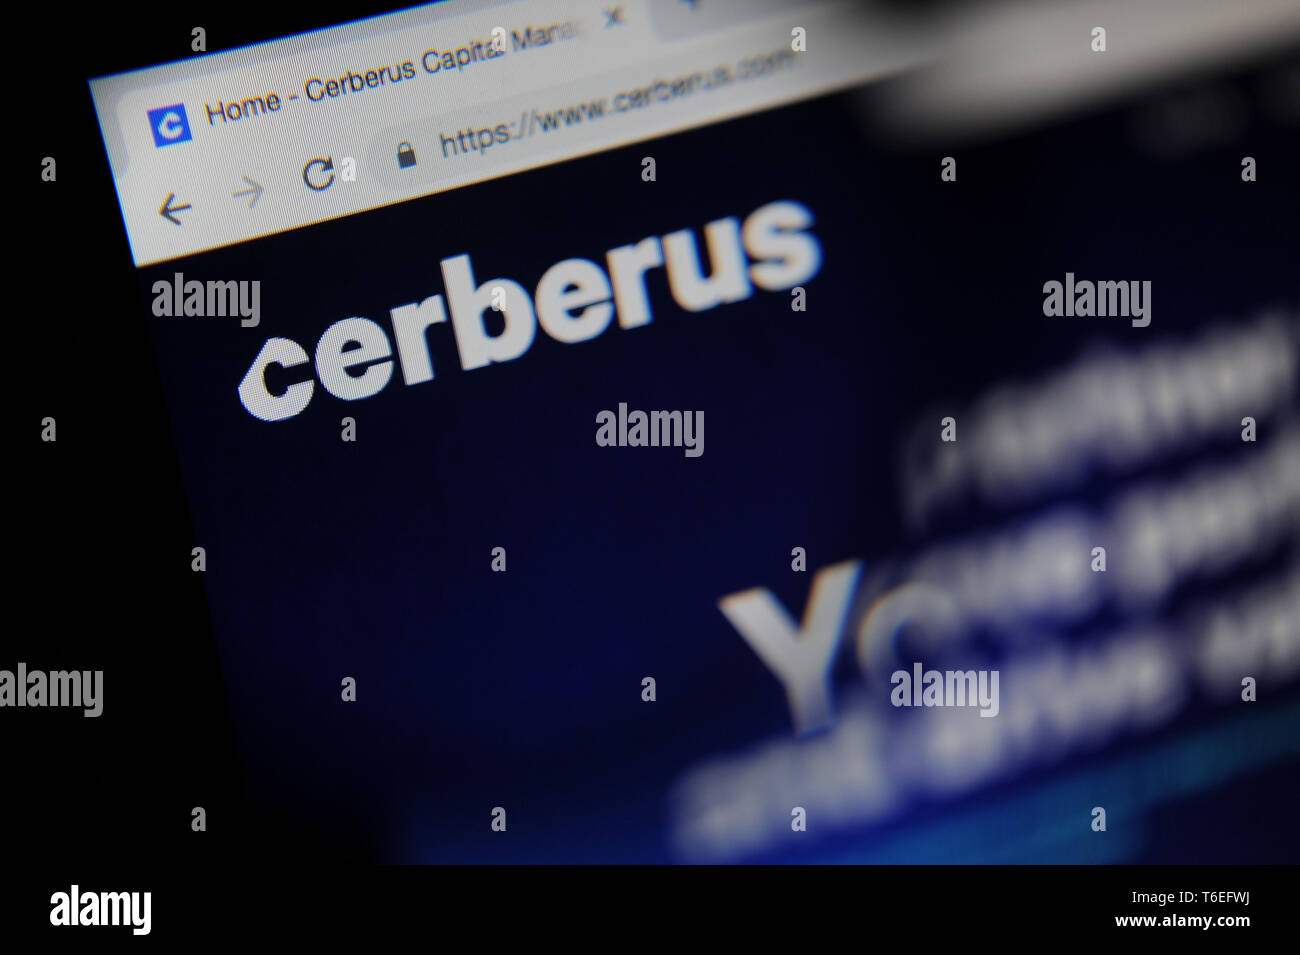 Cerberus Capital Management Foto de stock